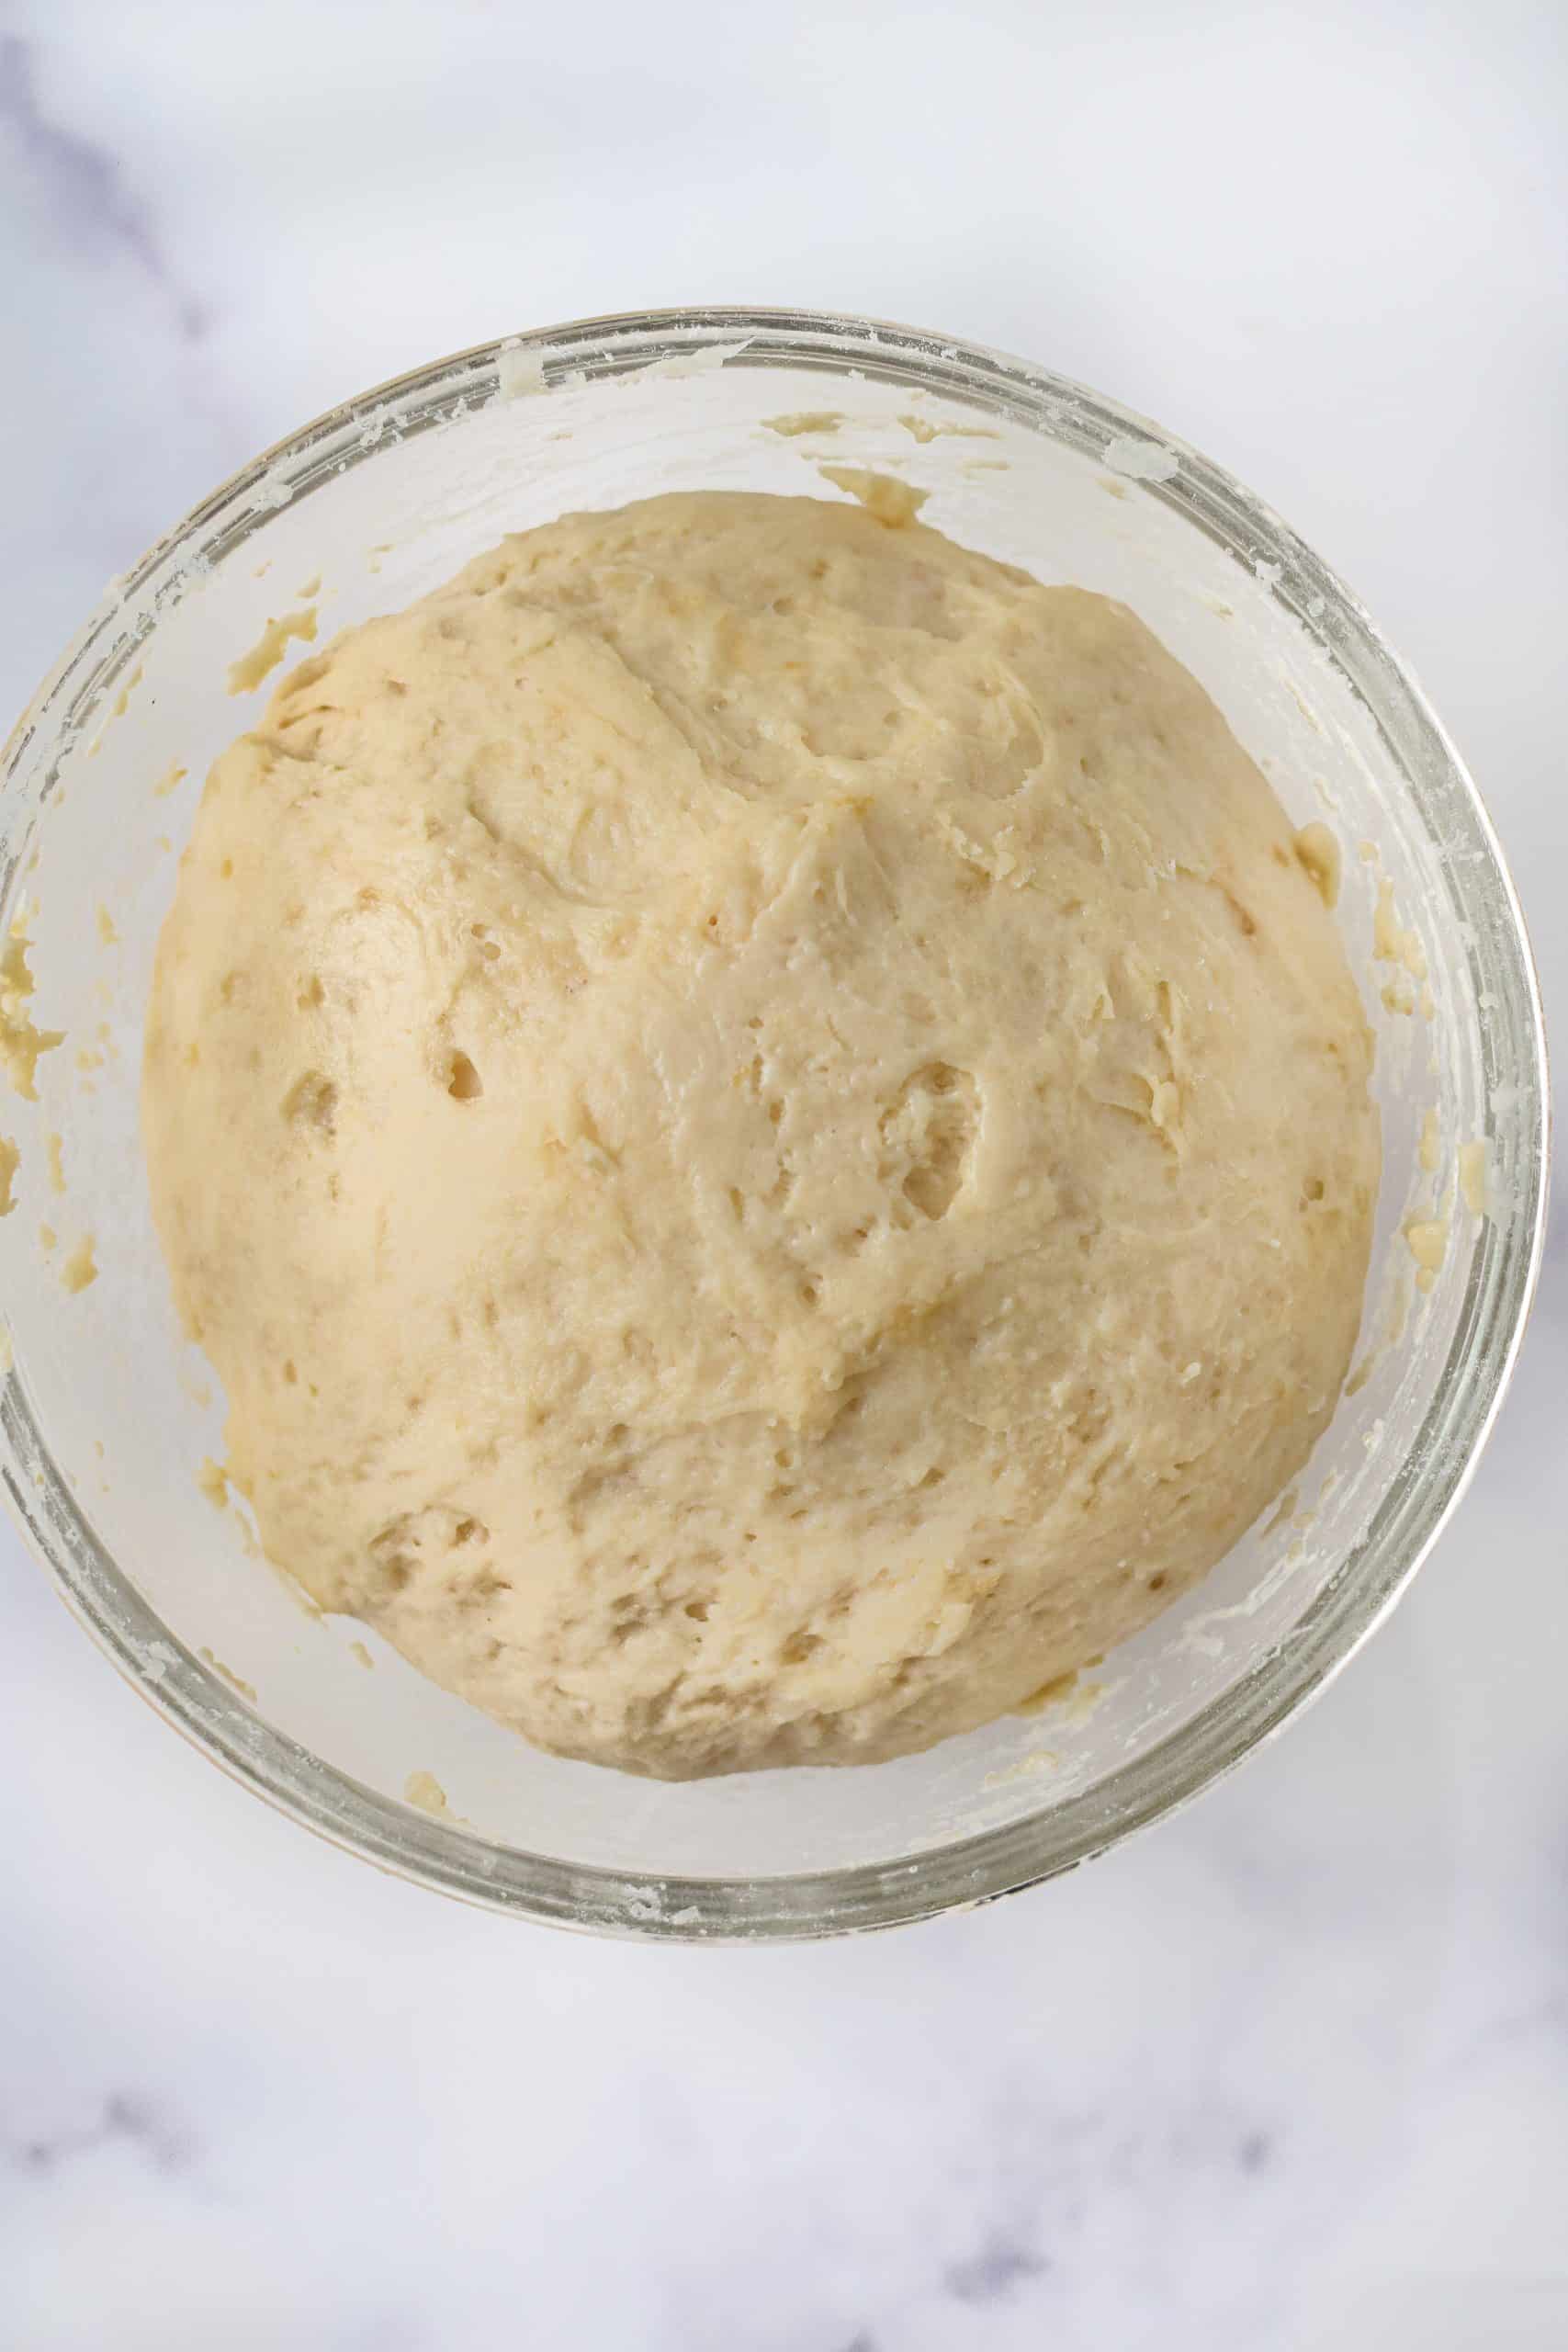 risen naan bread dough in a glass mixing bowl